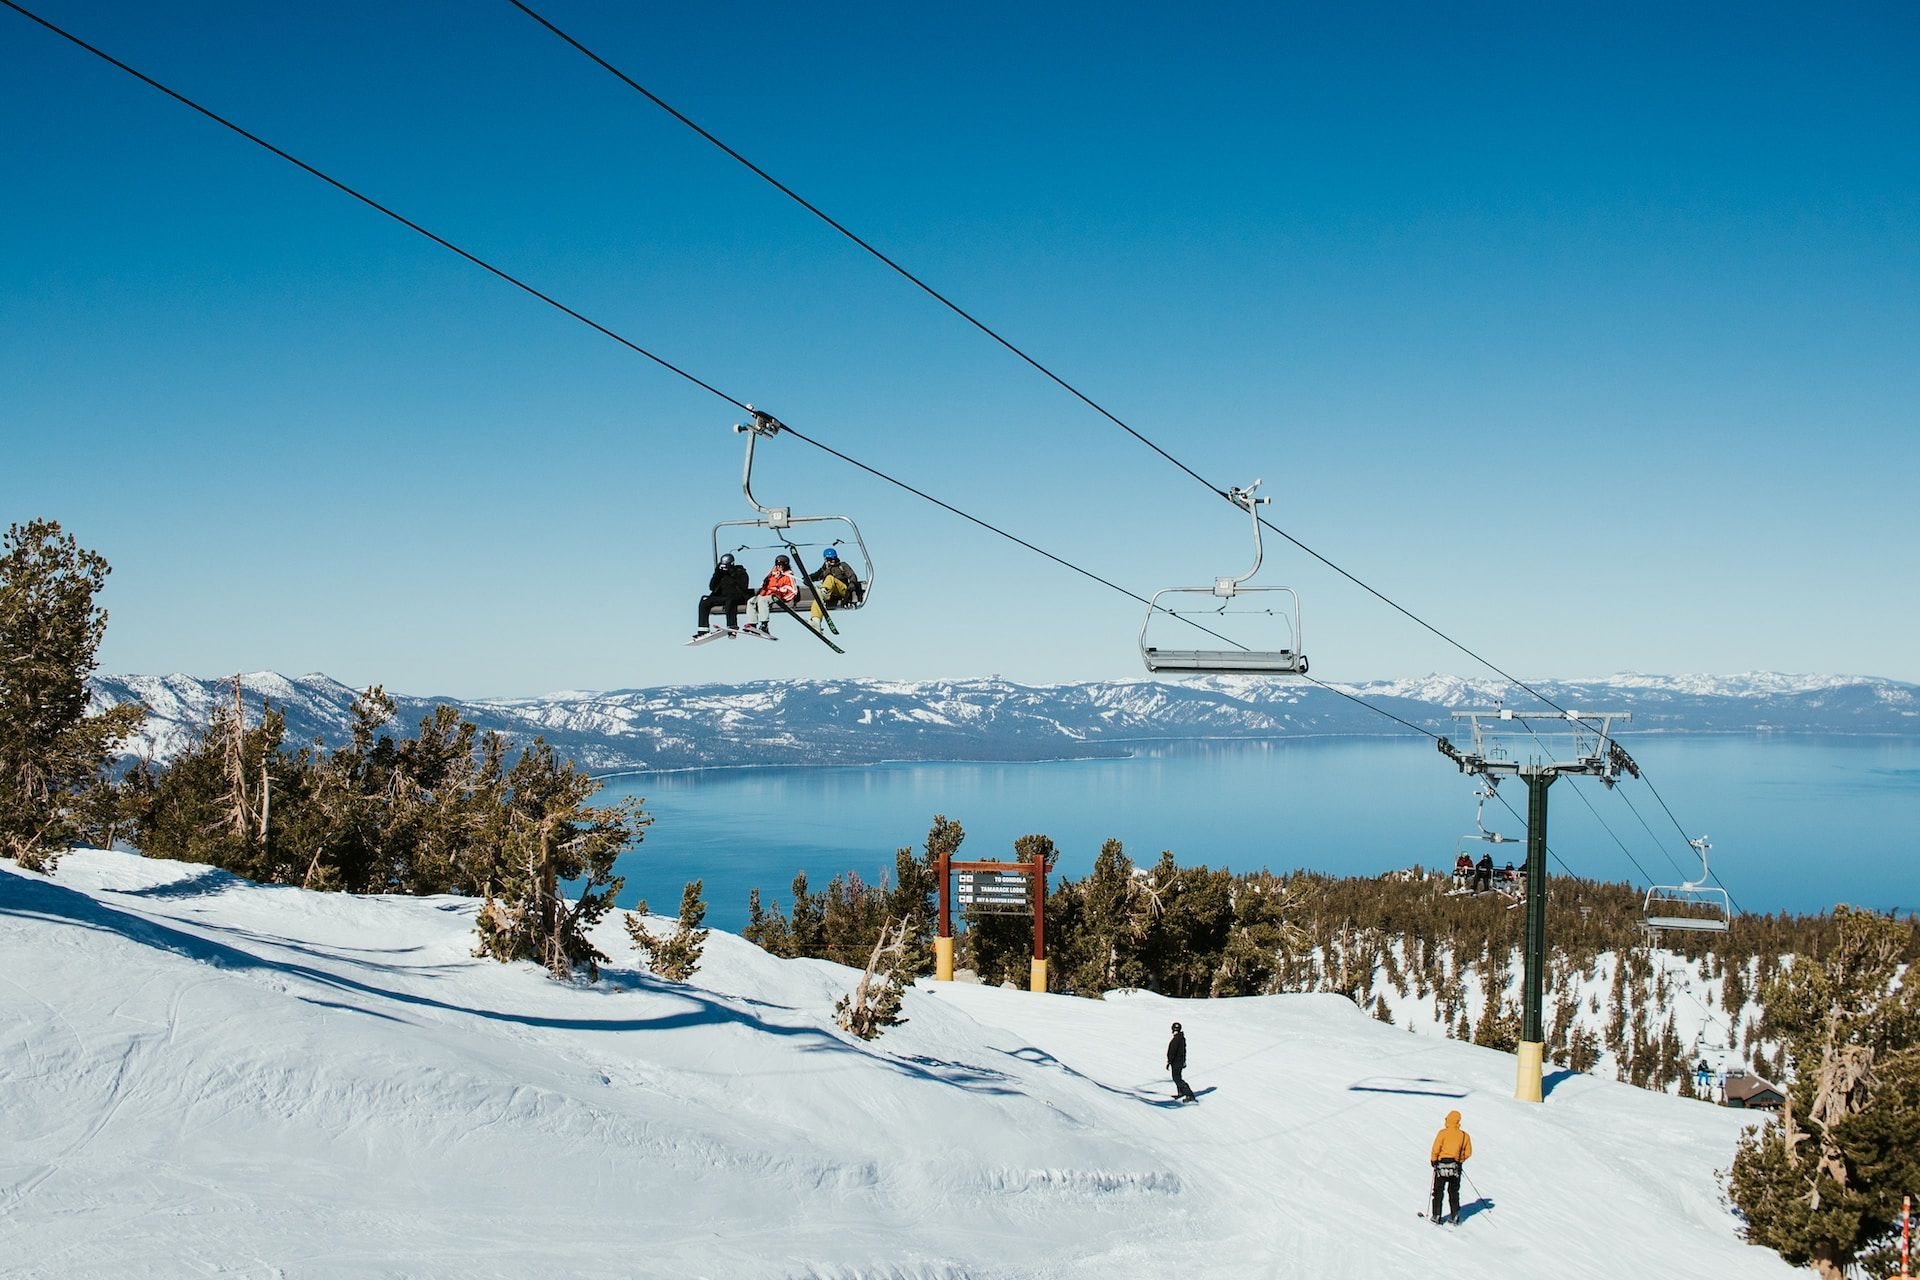 People riding the sky lifts at Heavenly Ski Resort, Lake Tahoe, California, USA